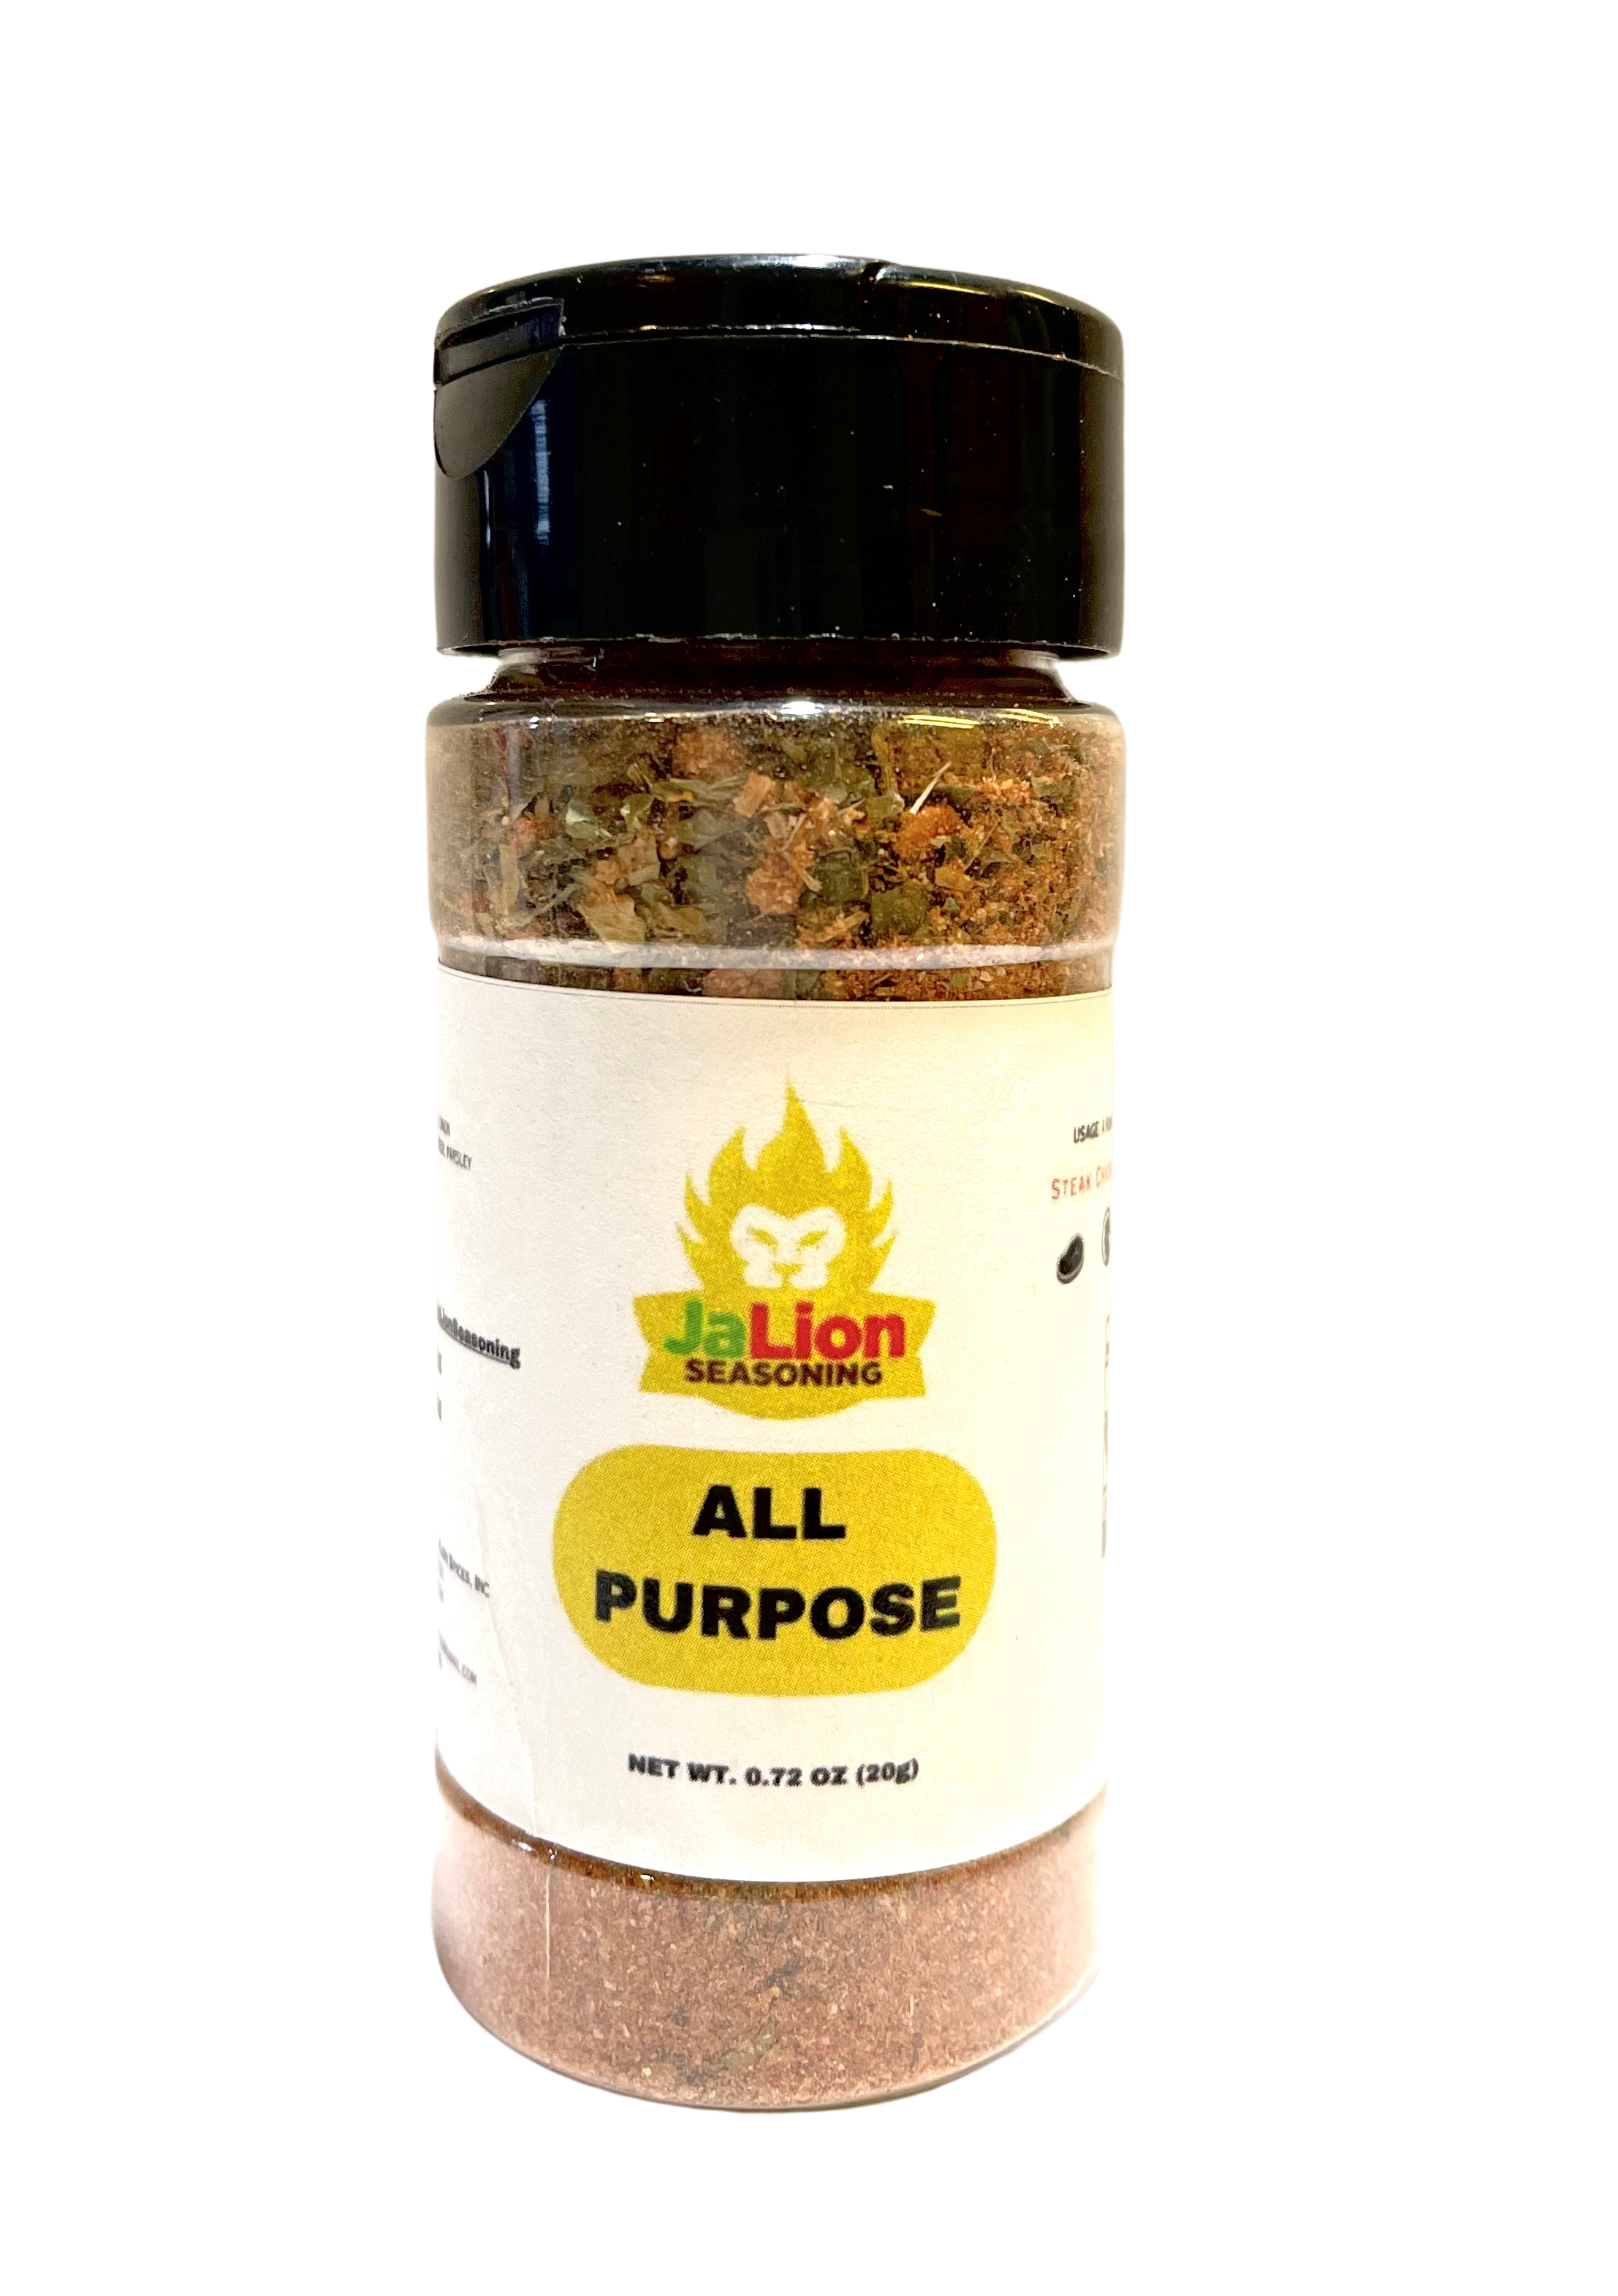 JaLion All-Purpose 4oz Seasoning